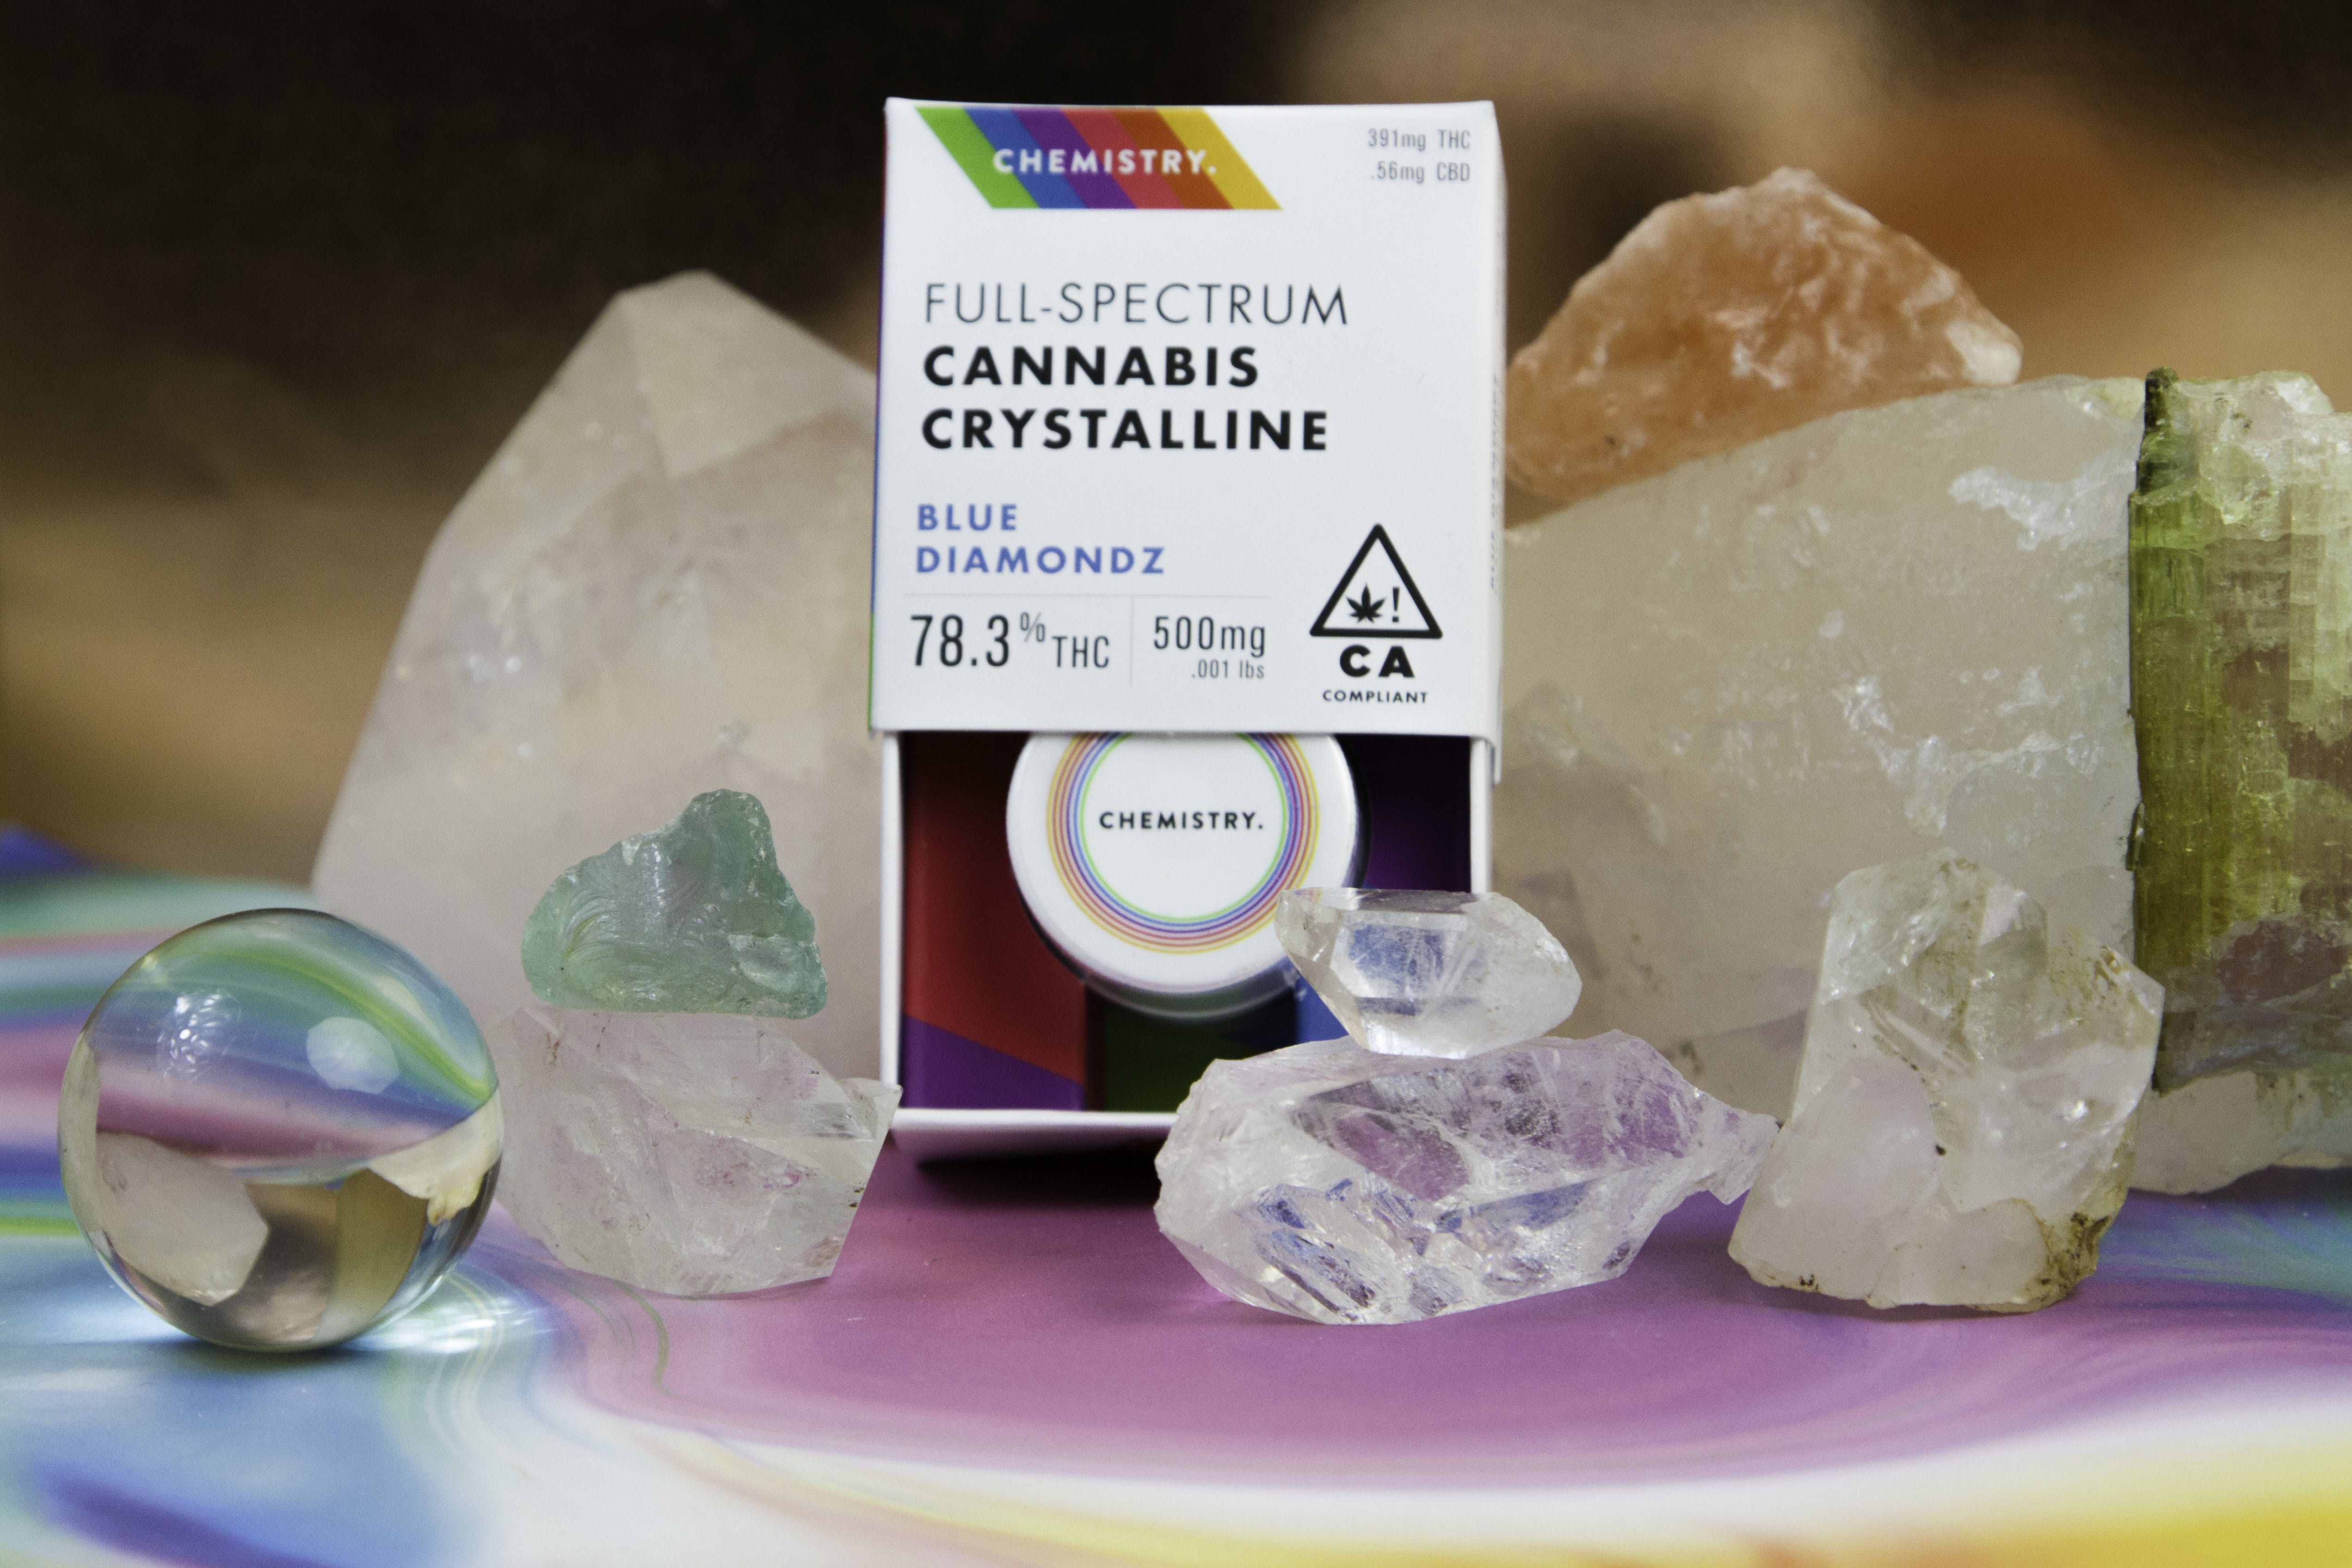 marijuana-dispensaries-22775-pacific-coast-highway-malibu-blue-diamondz-crystalline-500mg-chemistry